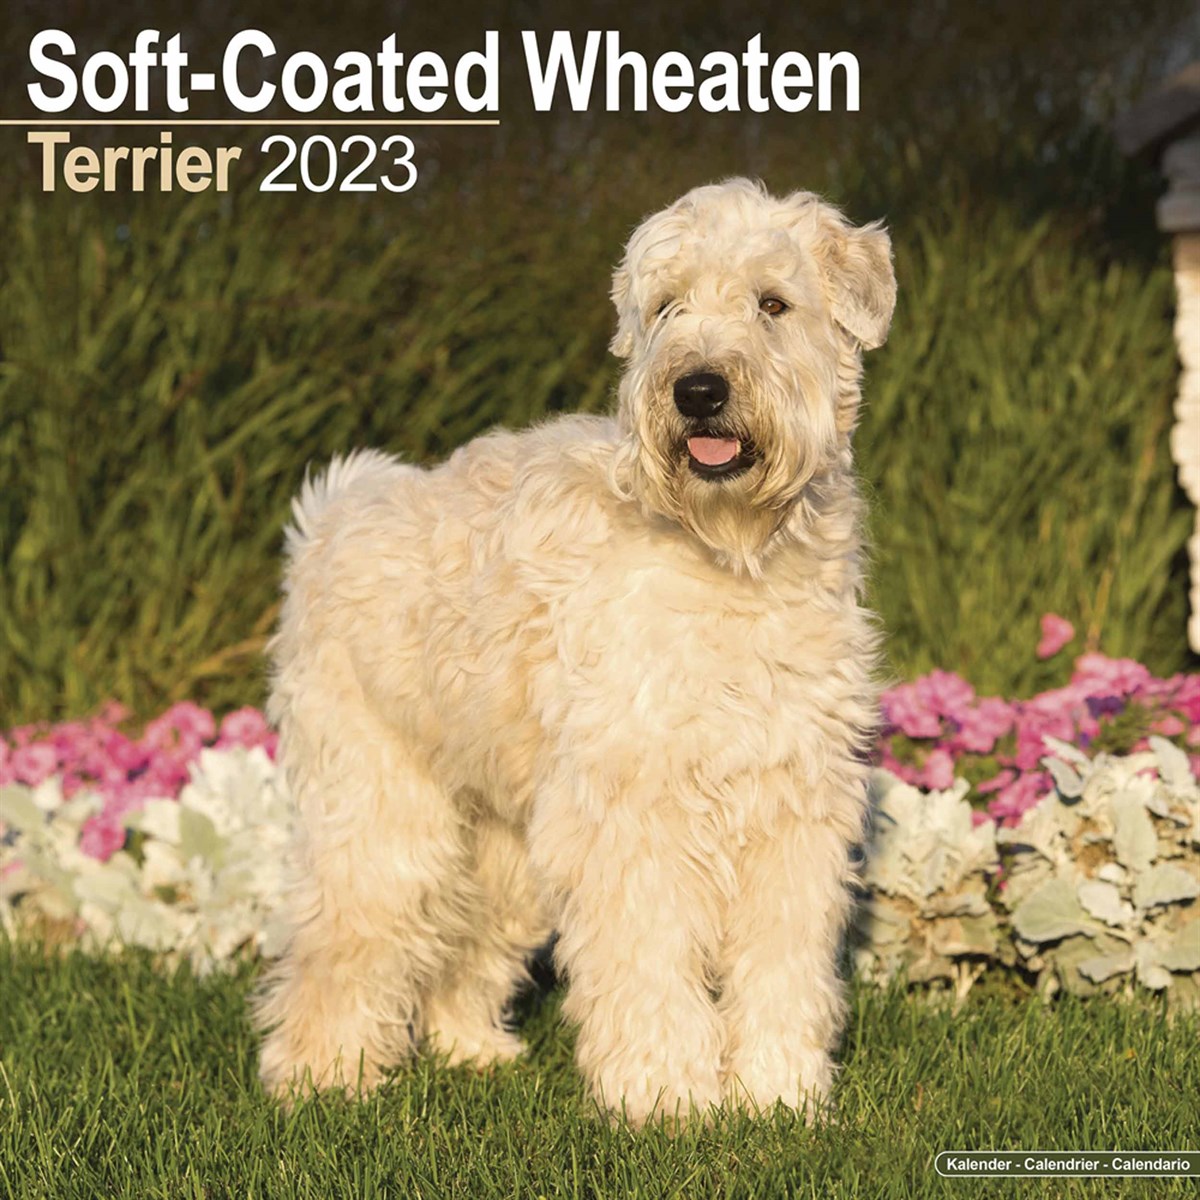 Soft-Coated Wheaten Terrier 2023 Calendars